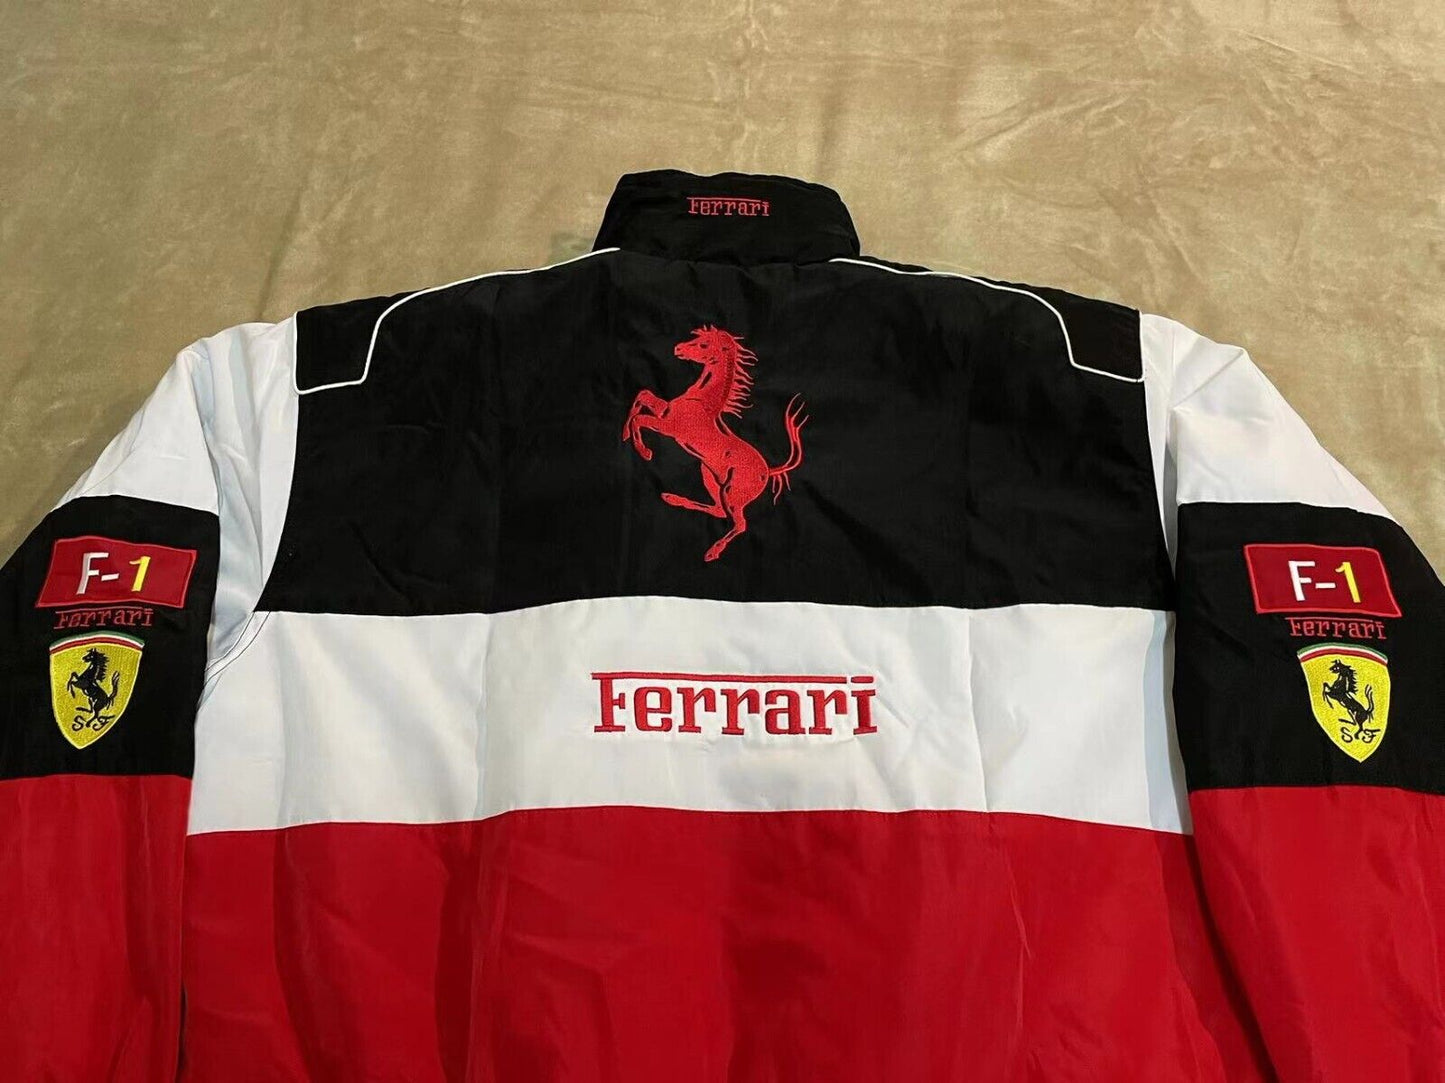 Ferrari Jacket - Unisex Racing Vintage Jacket, F1 Jacket, Motorsport Jacket